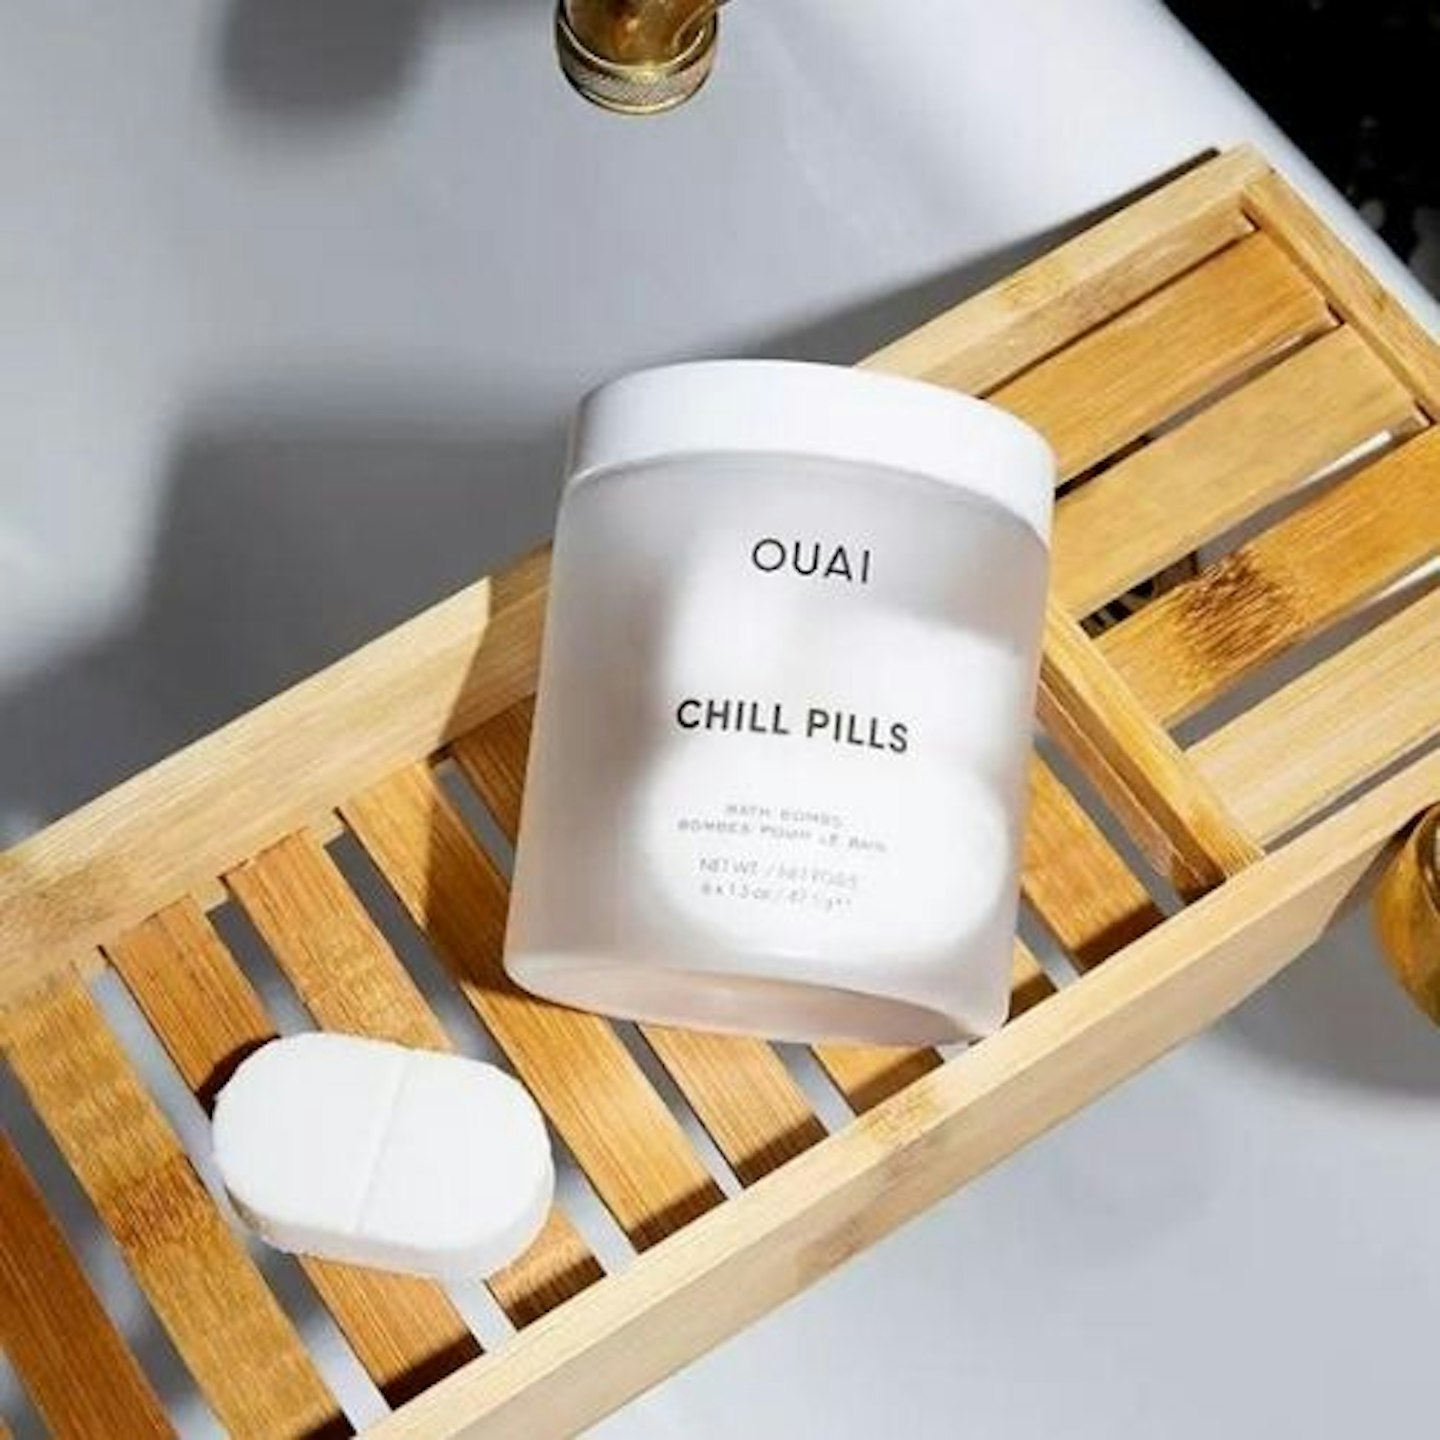 OUAI Chill Pills Bath Bombs